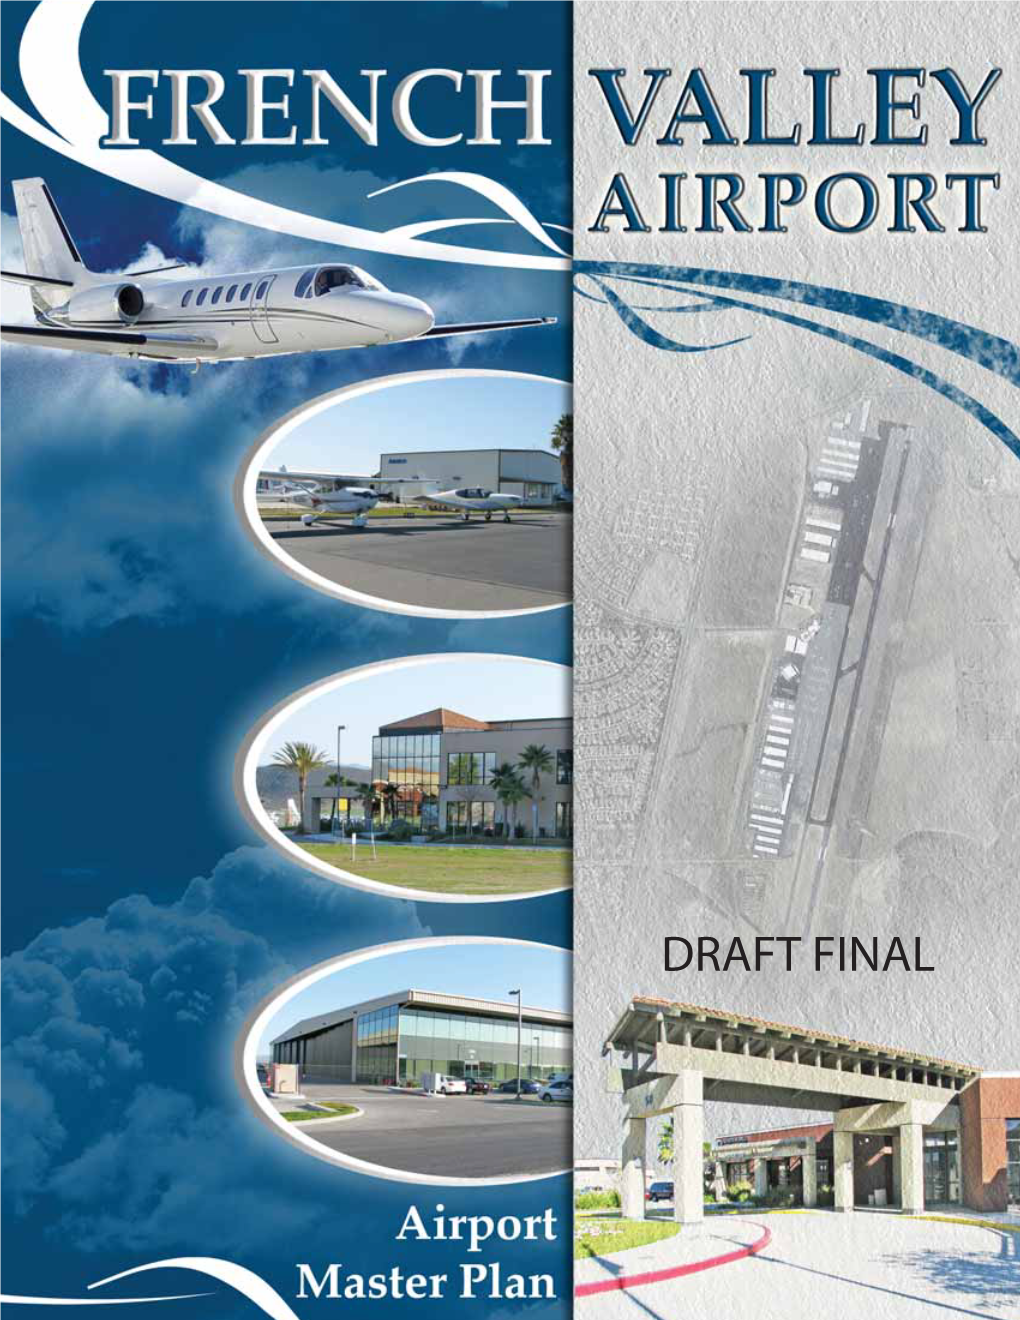 FRENCH VALLEY AIRPORT Murrieta, California Draft Final